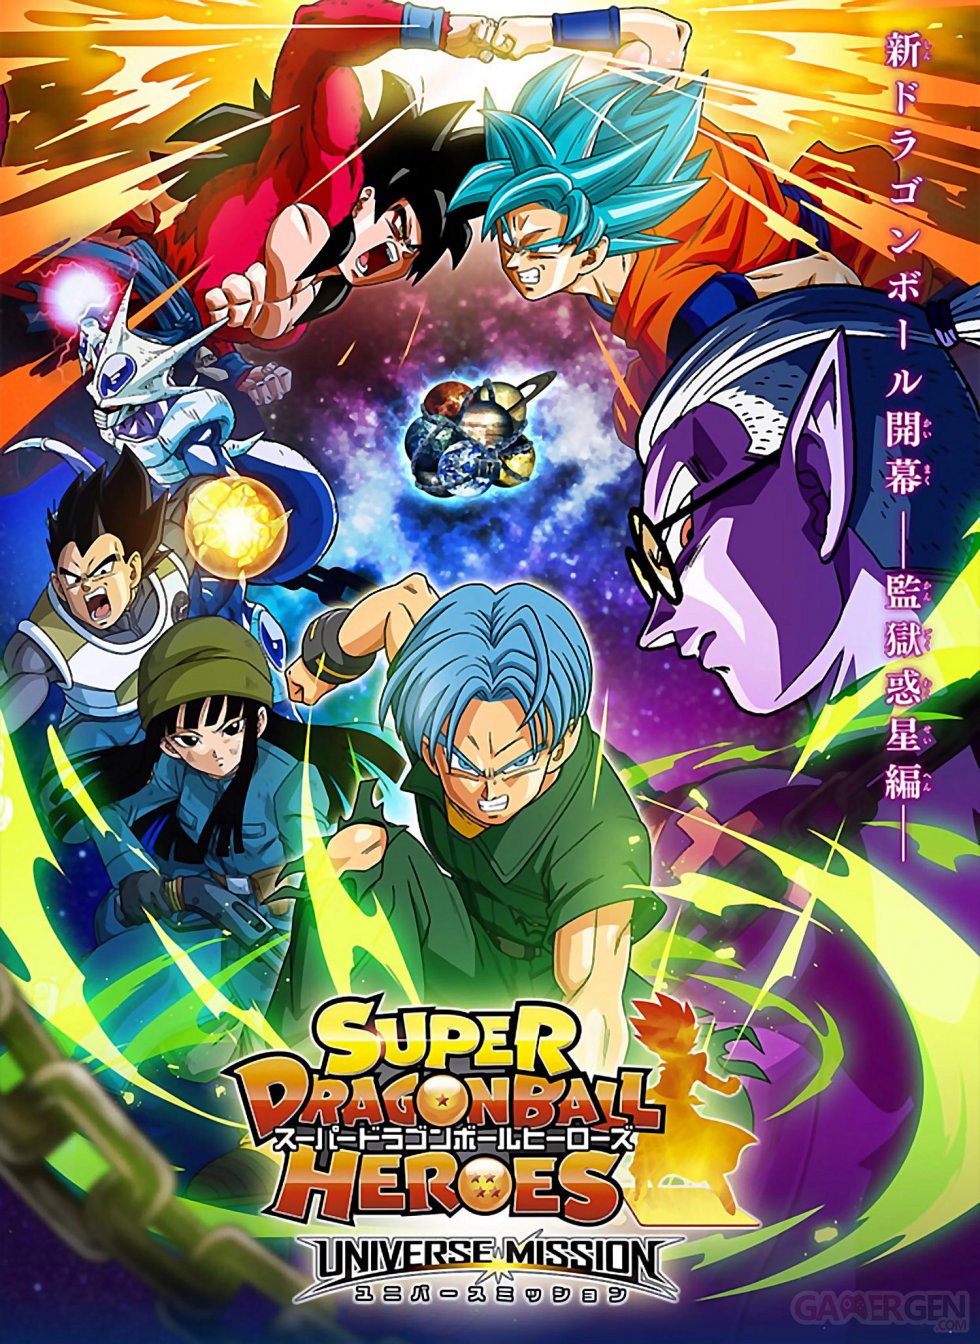 Super Dragon Ball Heroes image